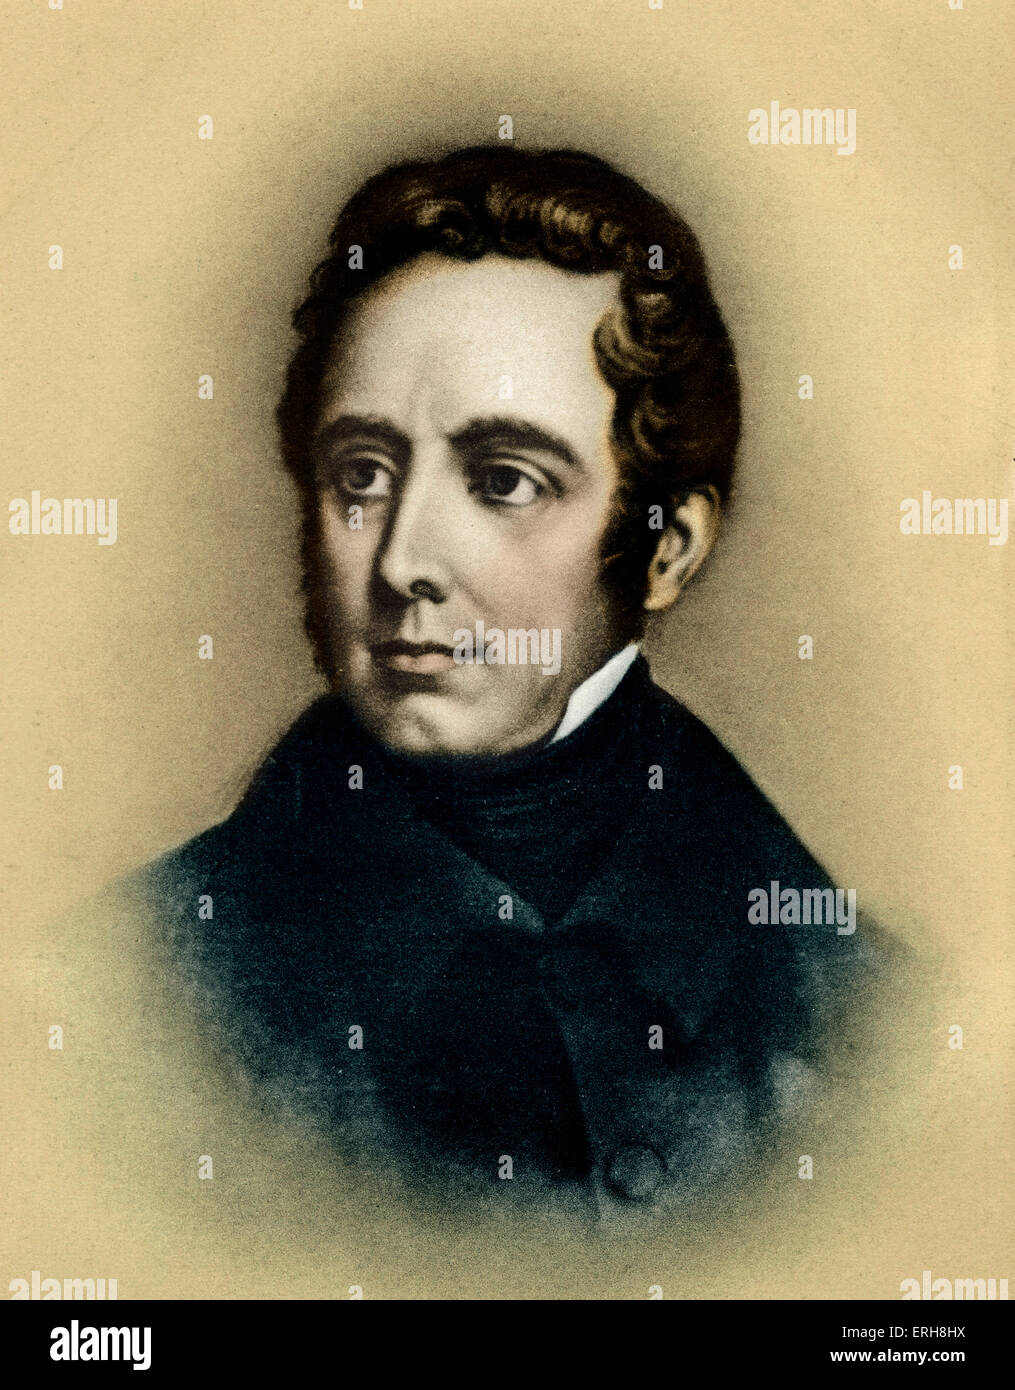 Alphonse-Marie-Louis de Praet de Lamartine, ritratto. Poeta francese e diplomatico 21 Ottobre 1790 - 28 febbraio 1869. Foto Stock